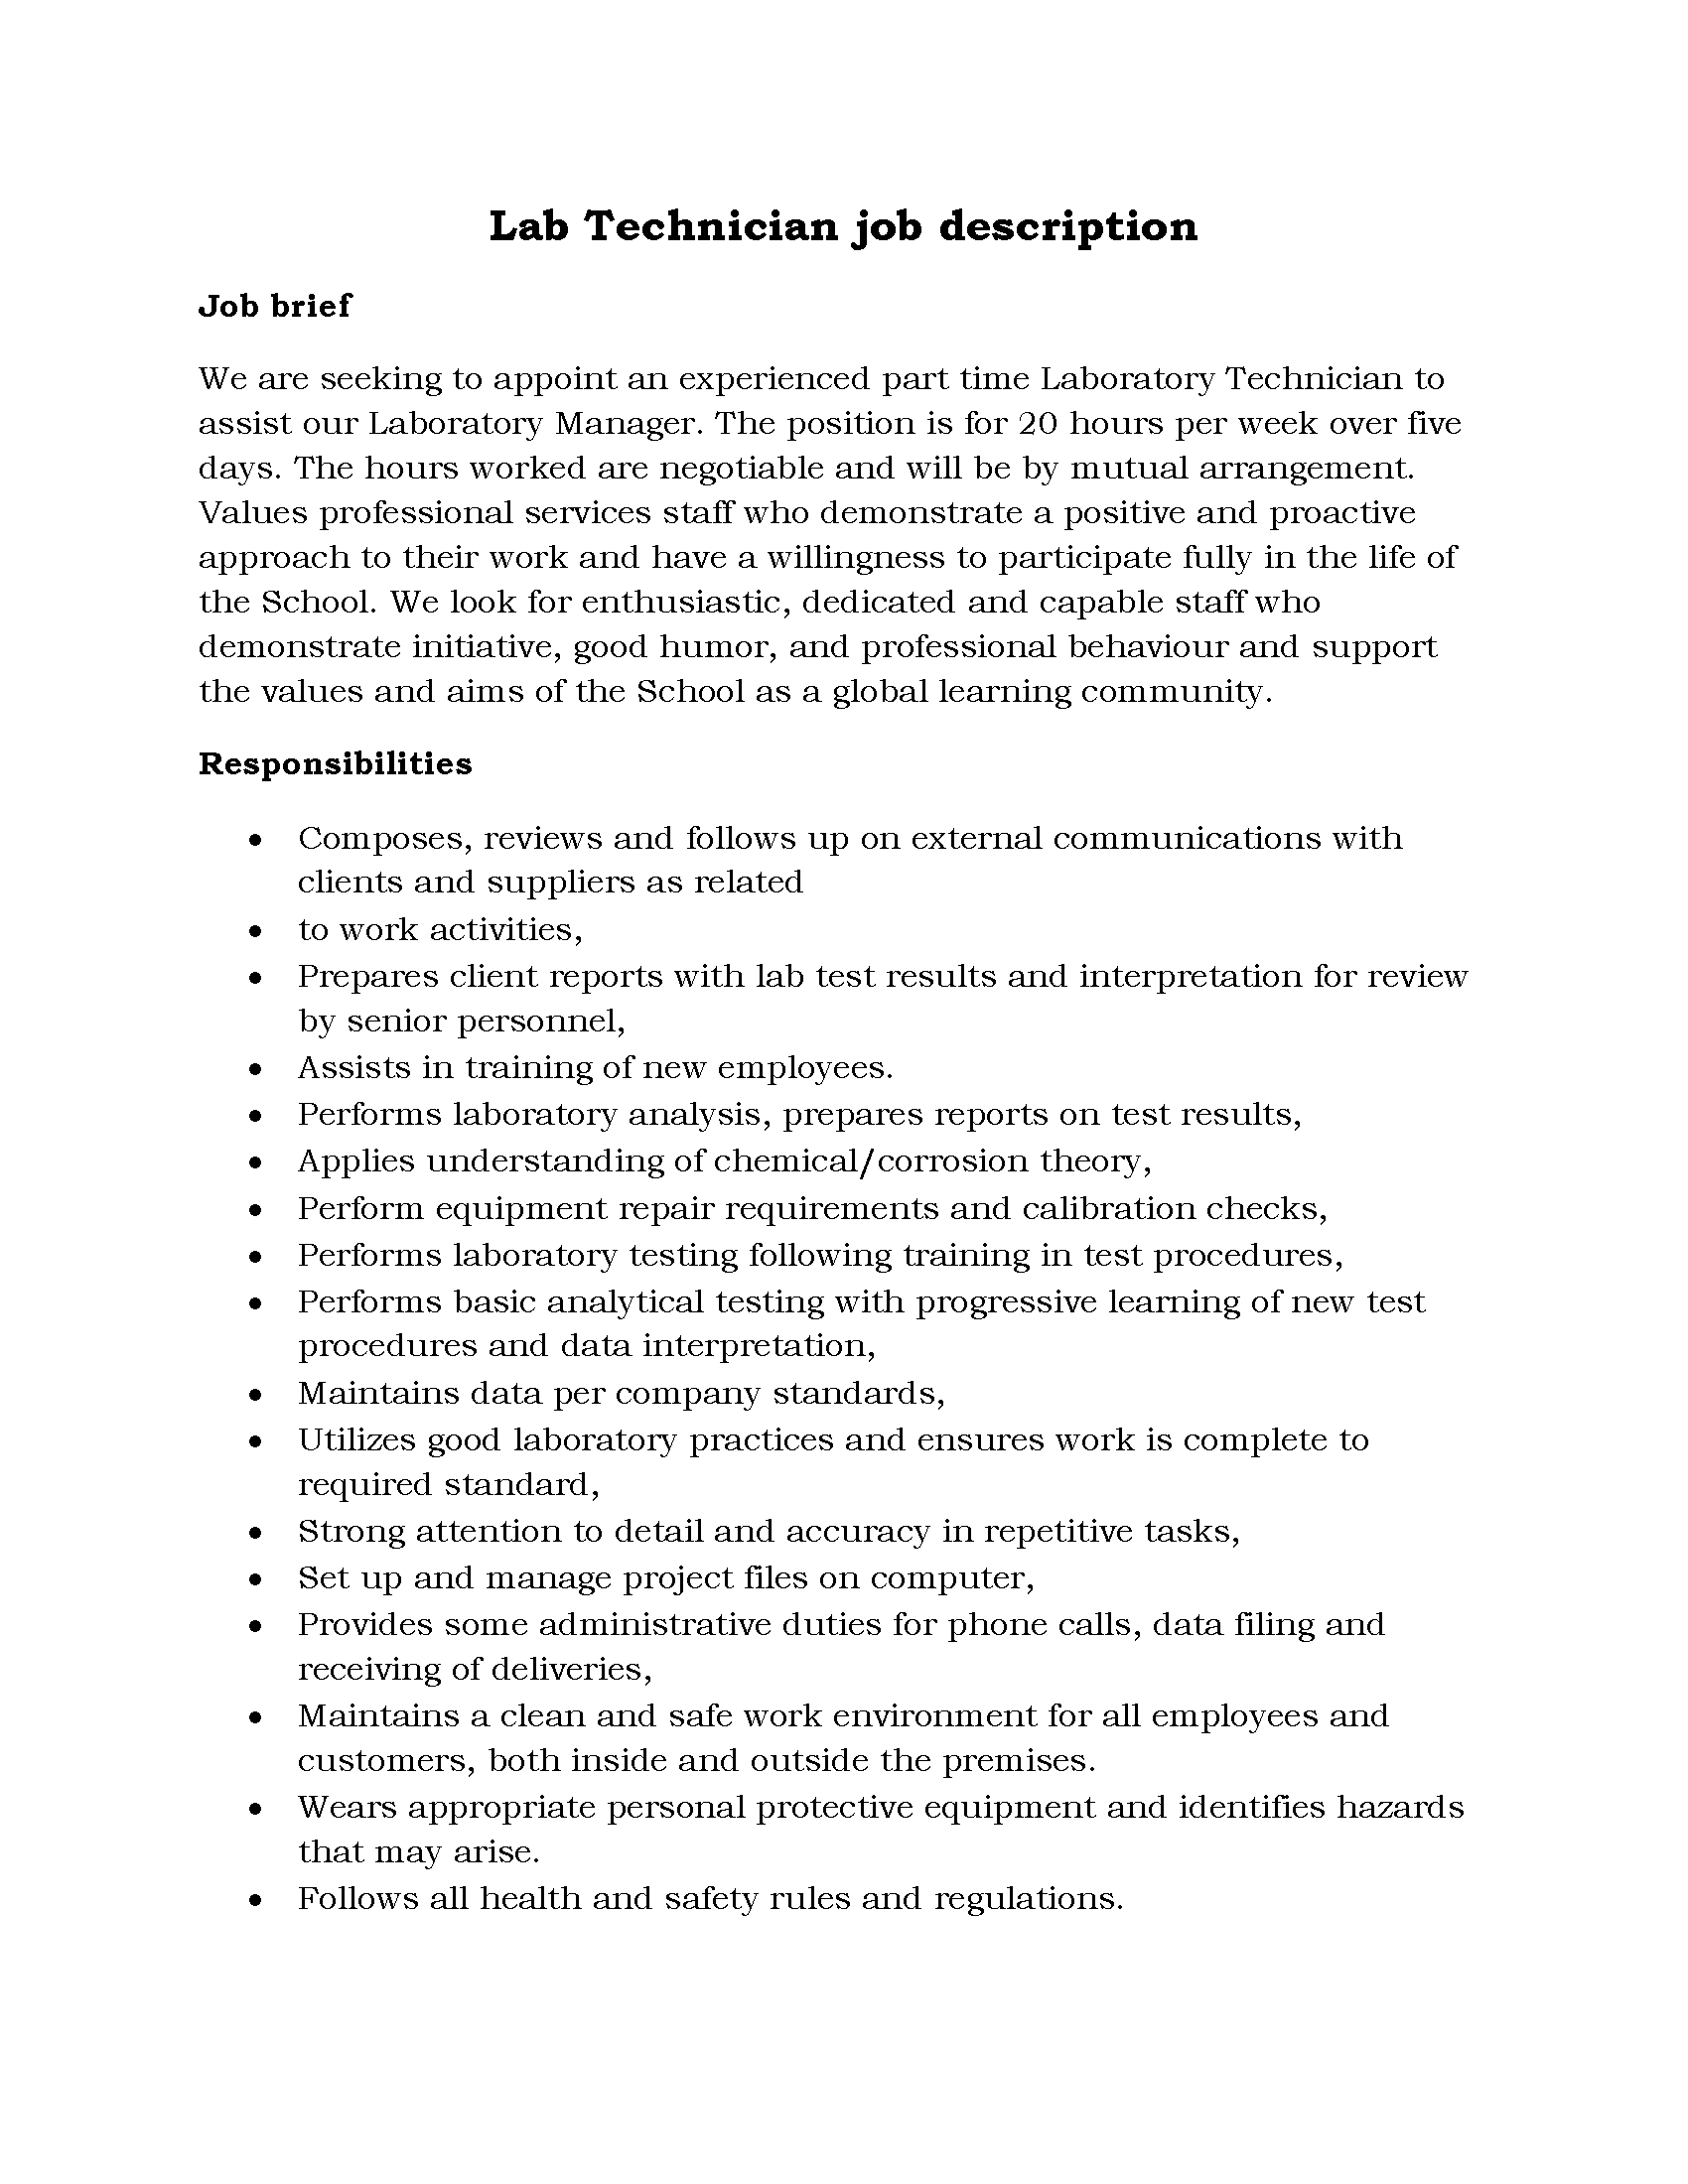 60-Lab Technician job description